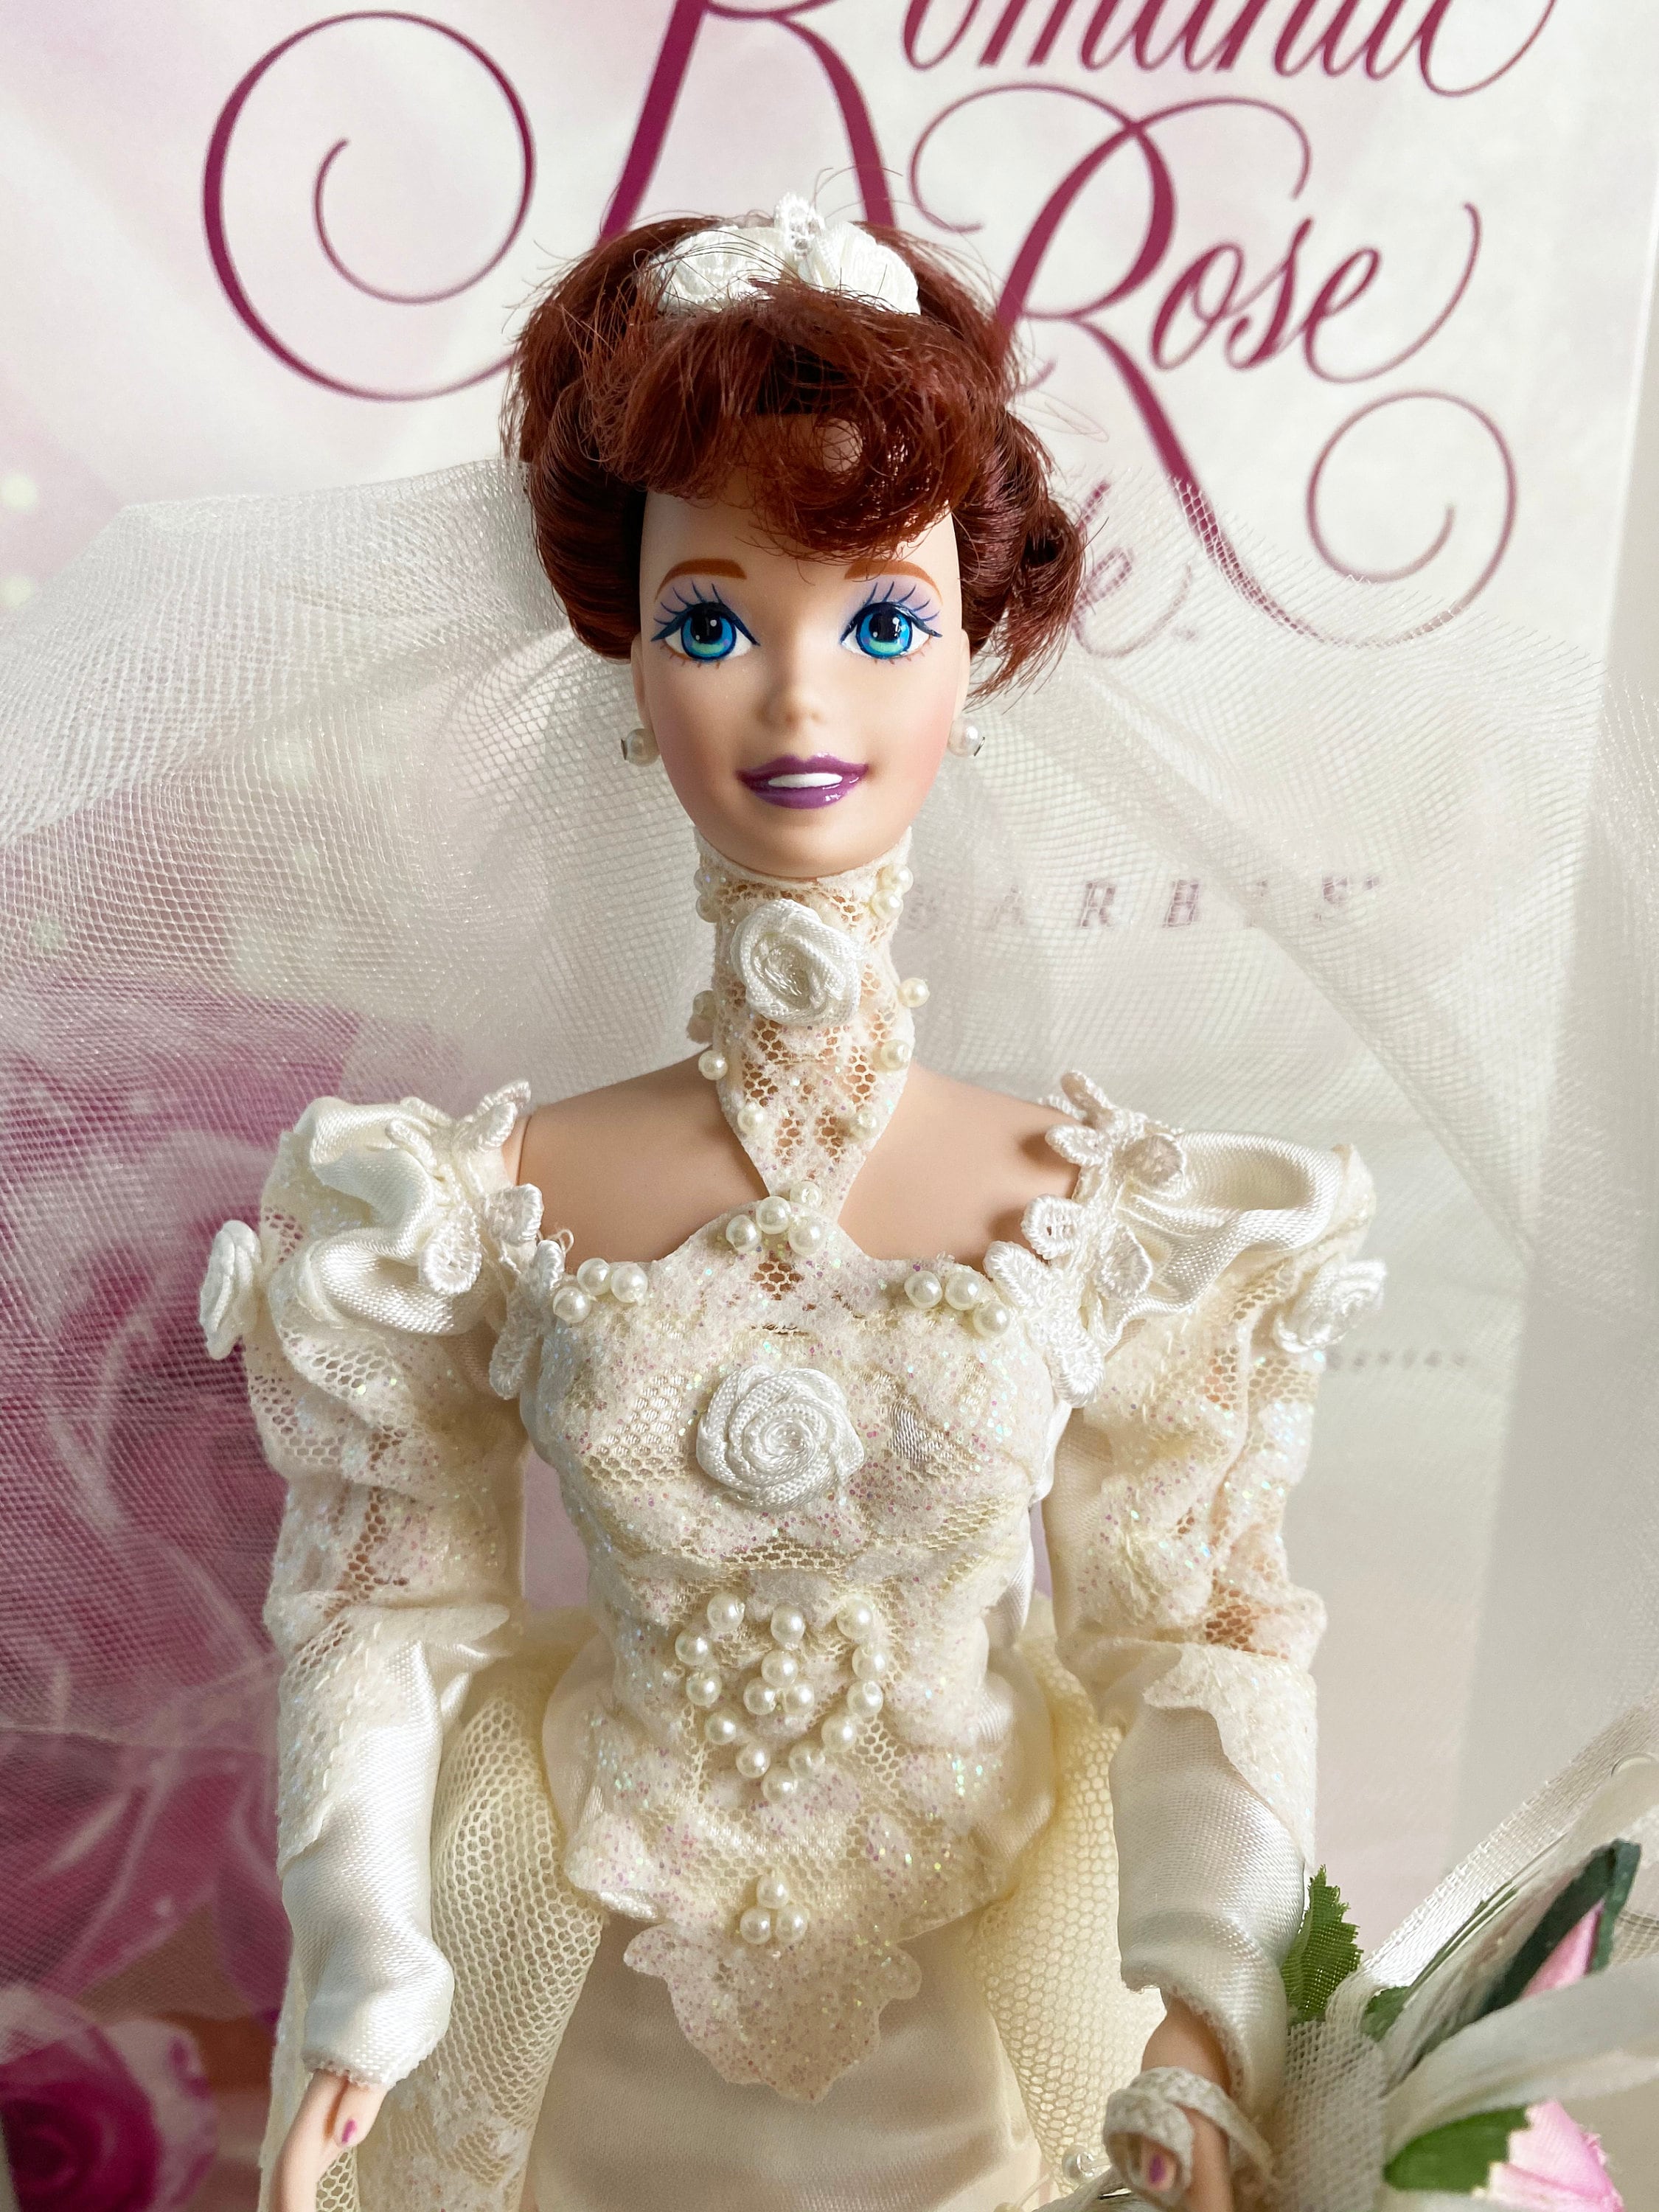 Romantic Rose Bride Porcelain Barbie Doll Limited Edition